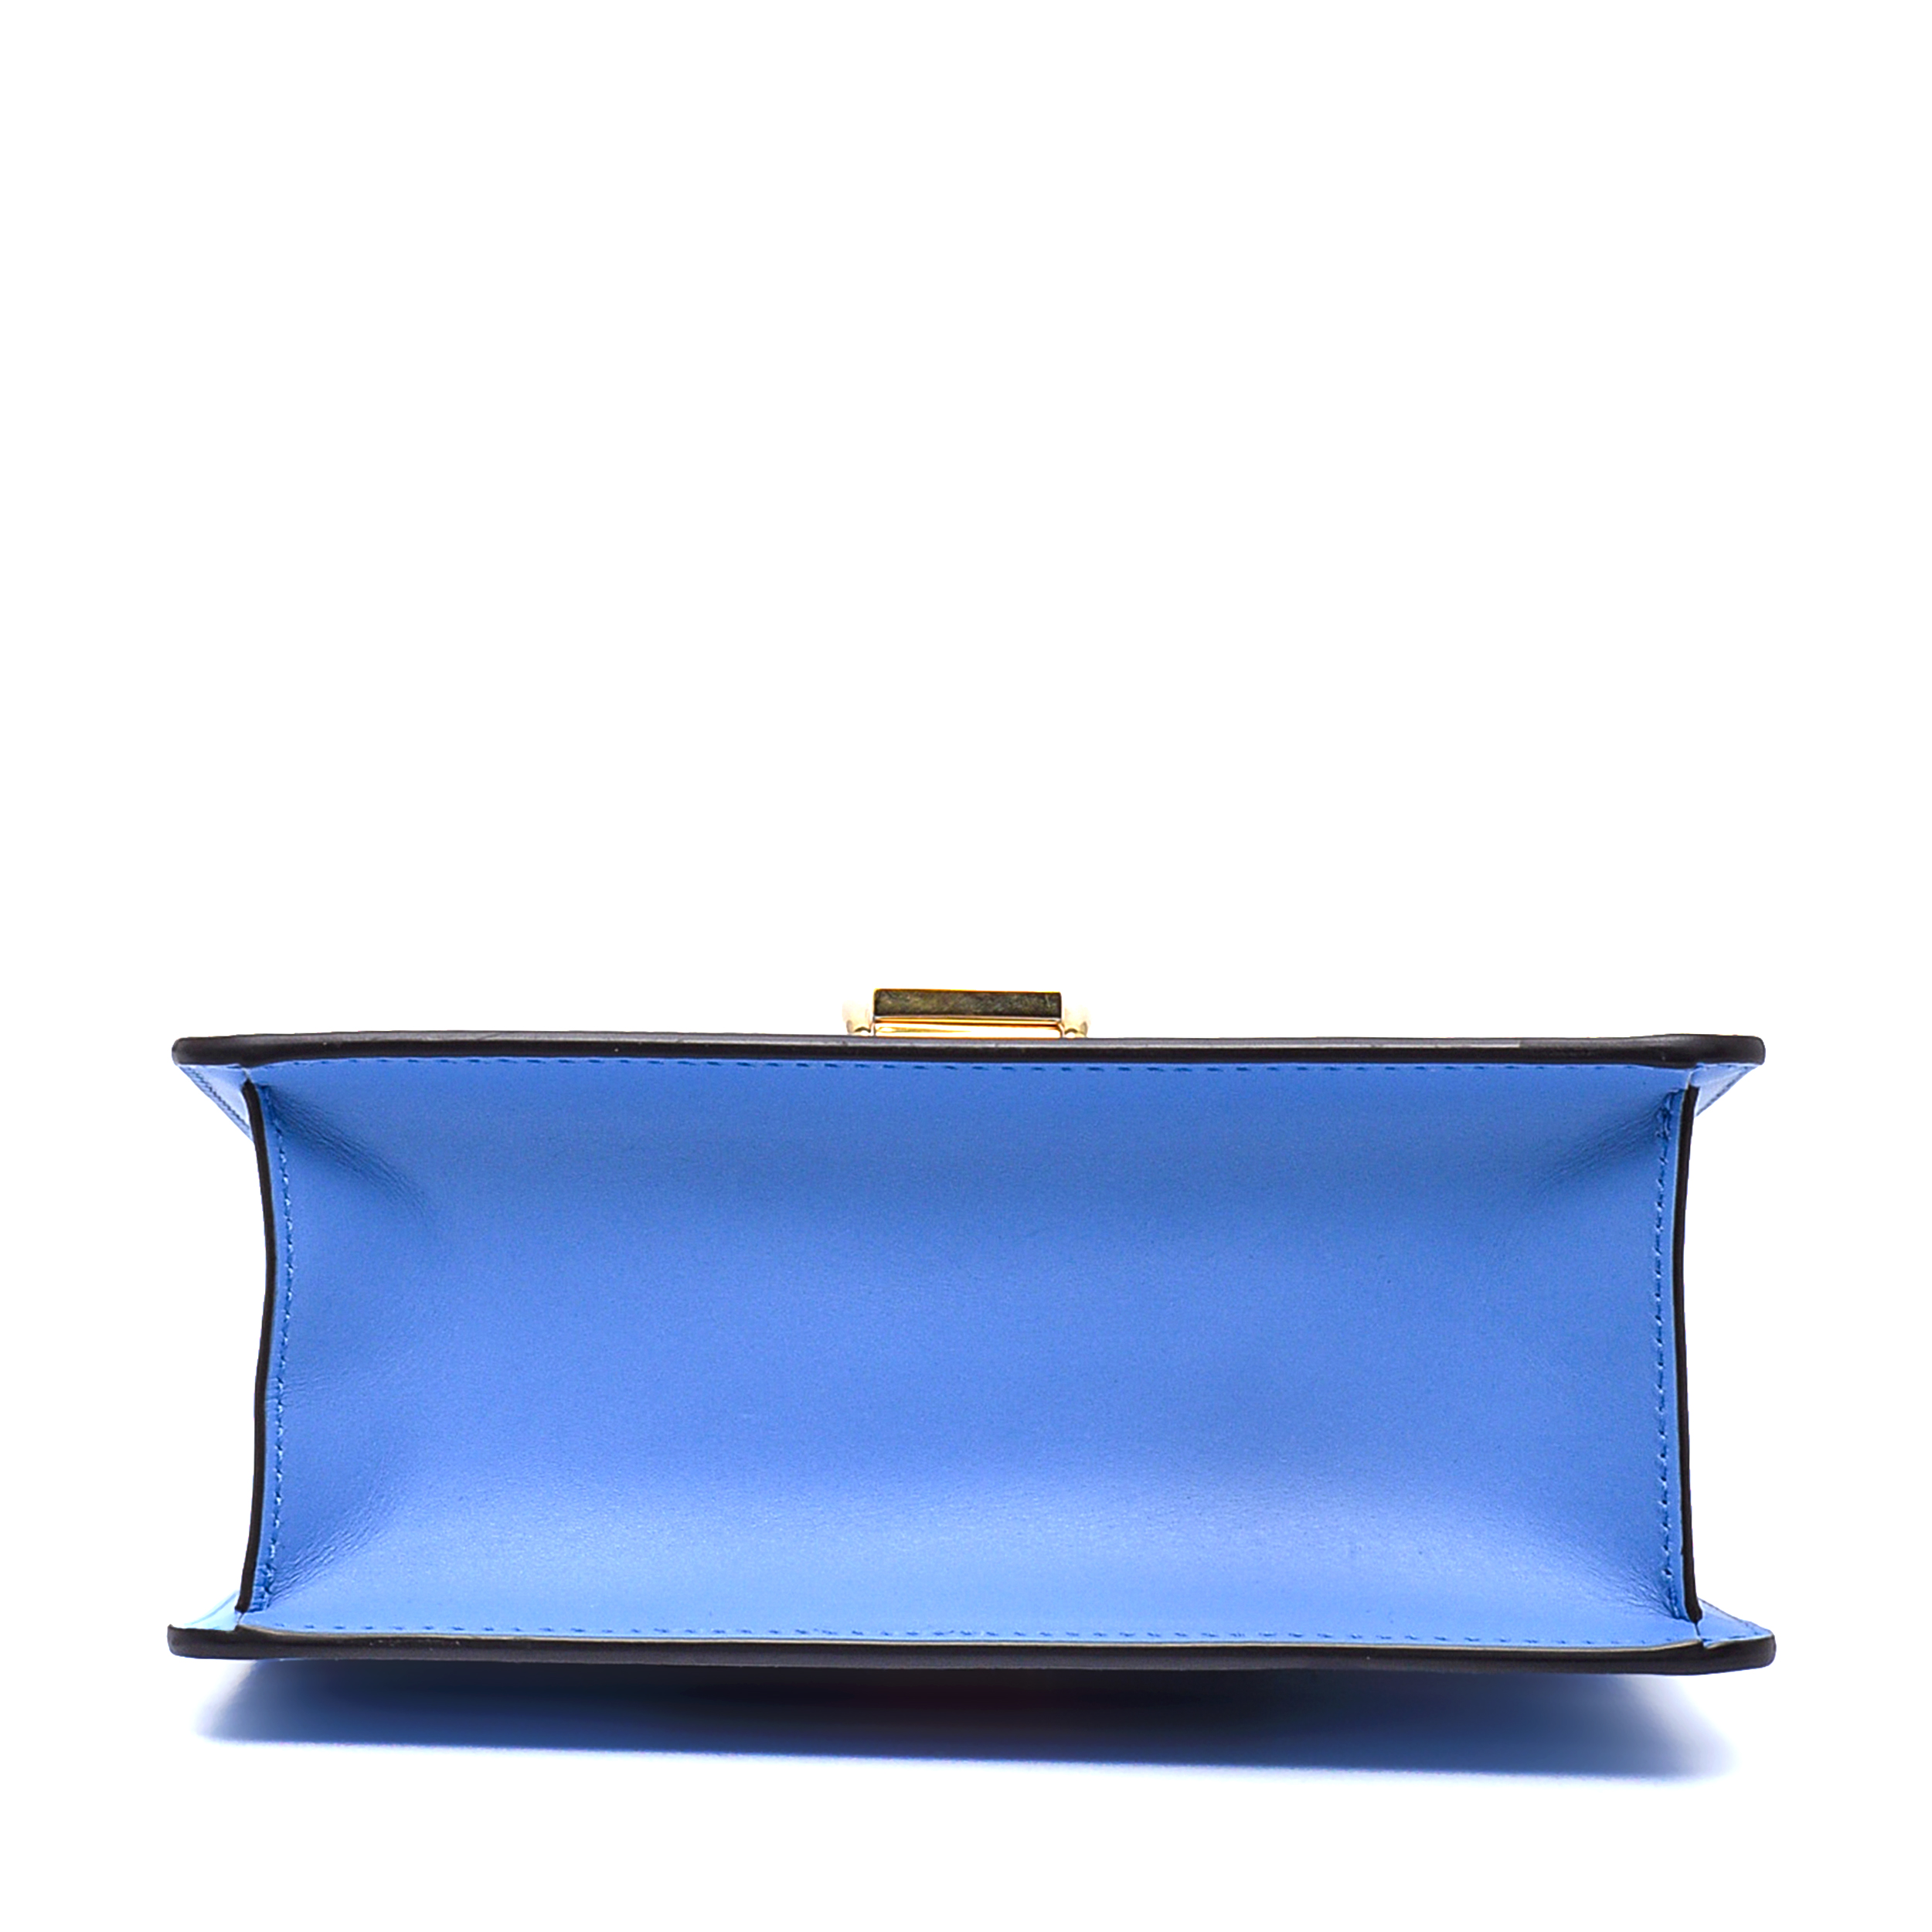 Gucci - Sylvie Blue Leather Mini Top Handle 2 Strap Bag